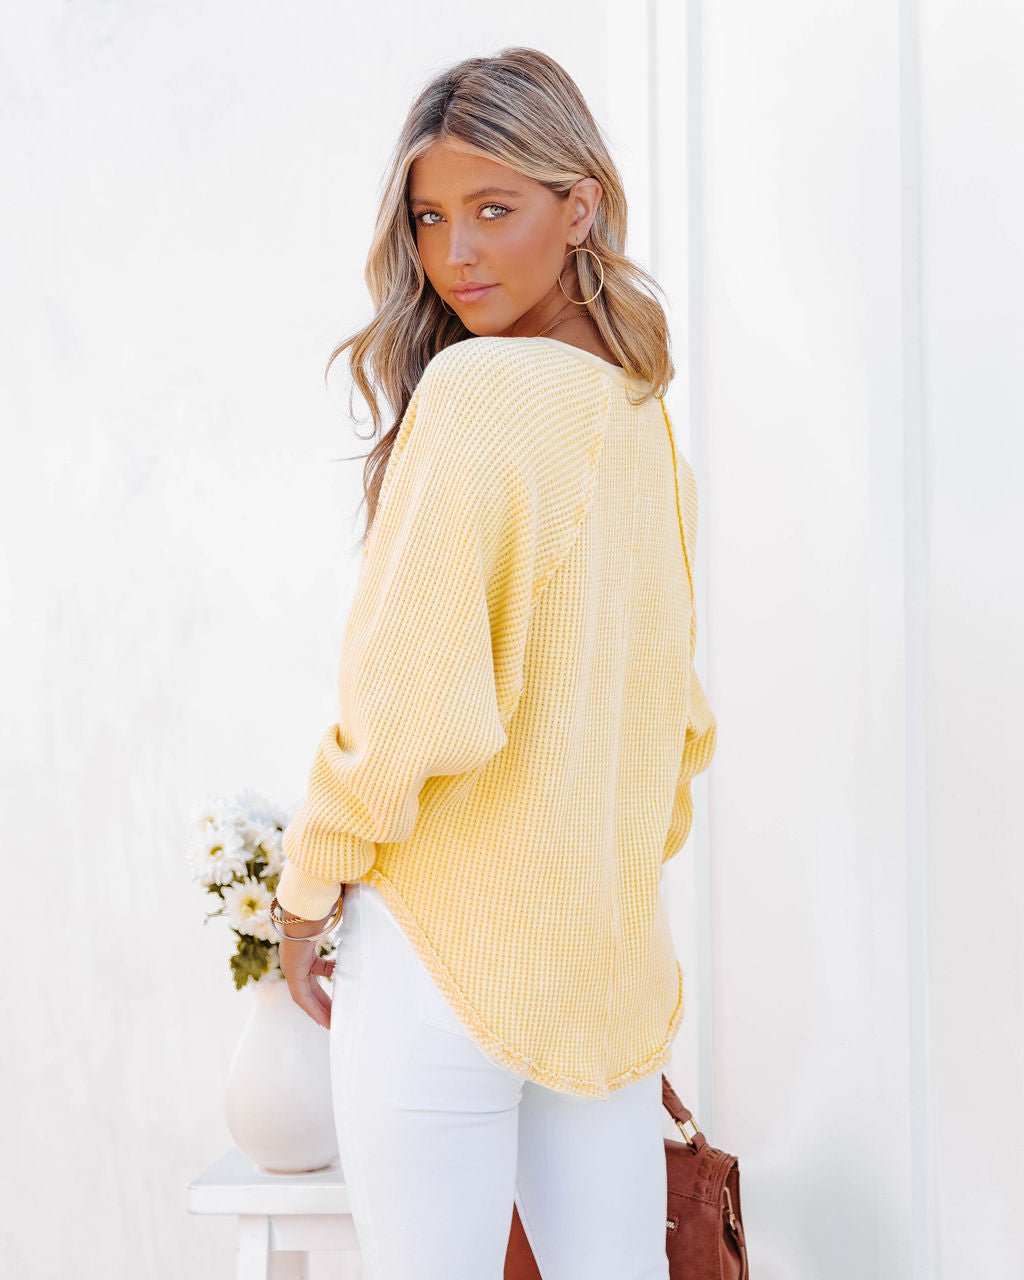 Lizabeth Cotton Thermal Knit Top - Yellow